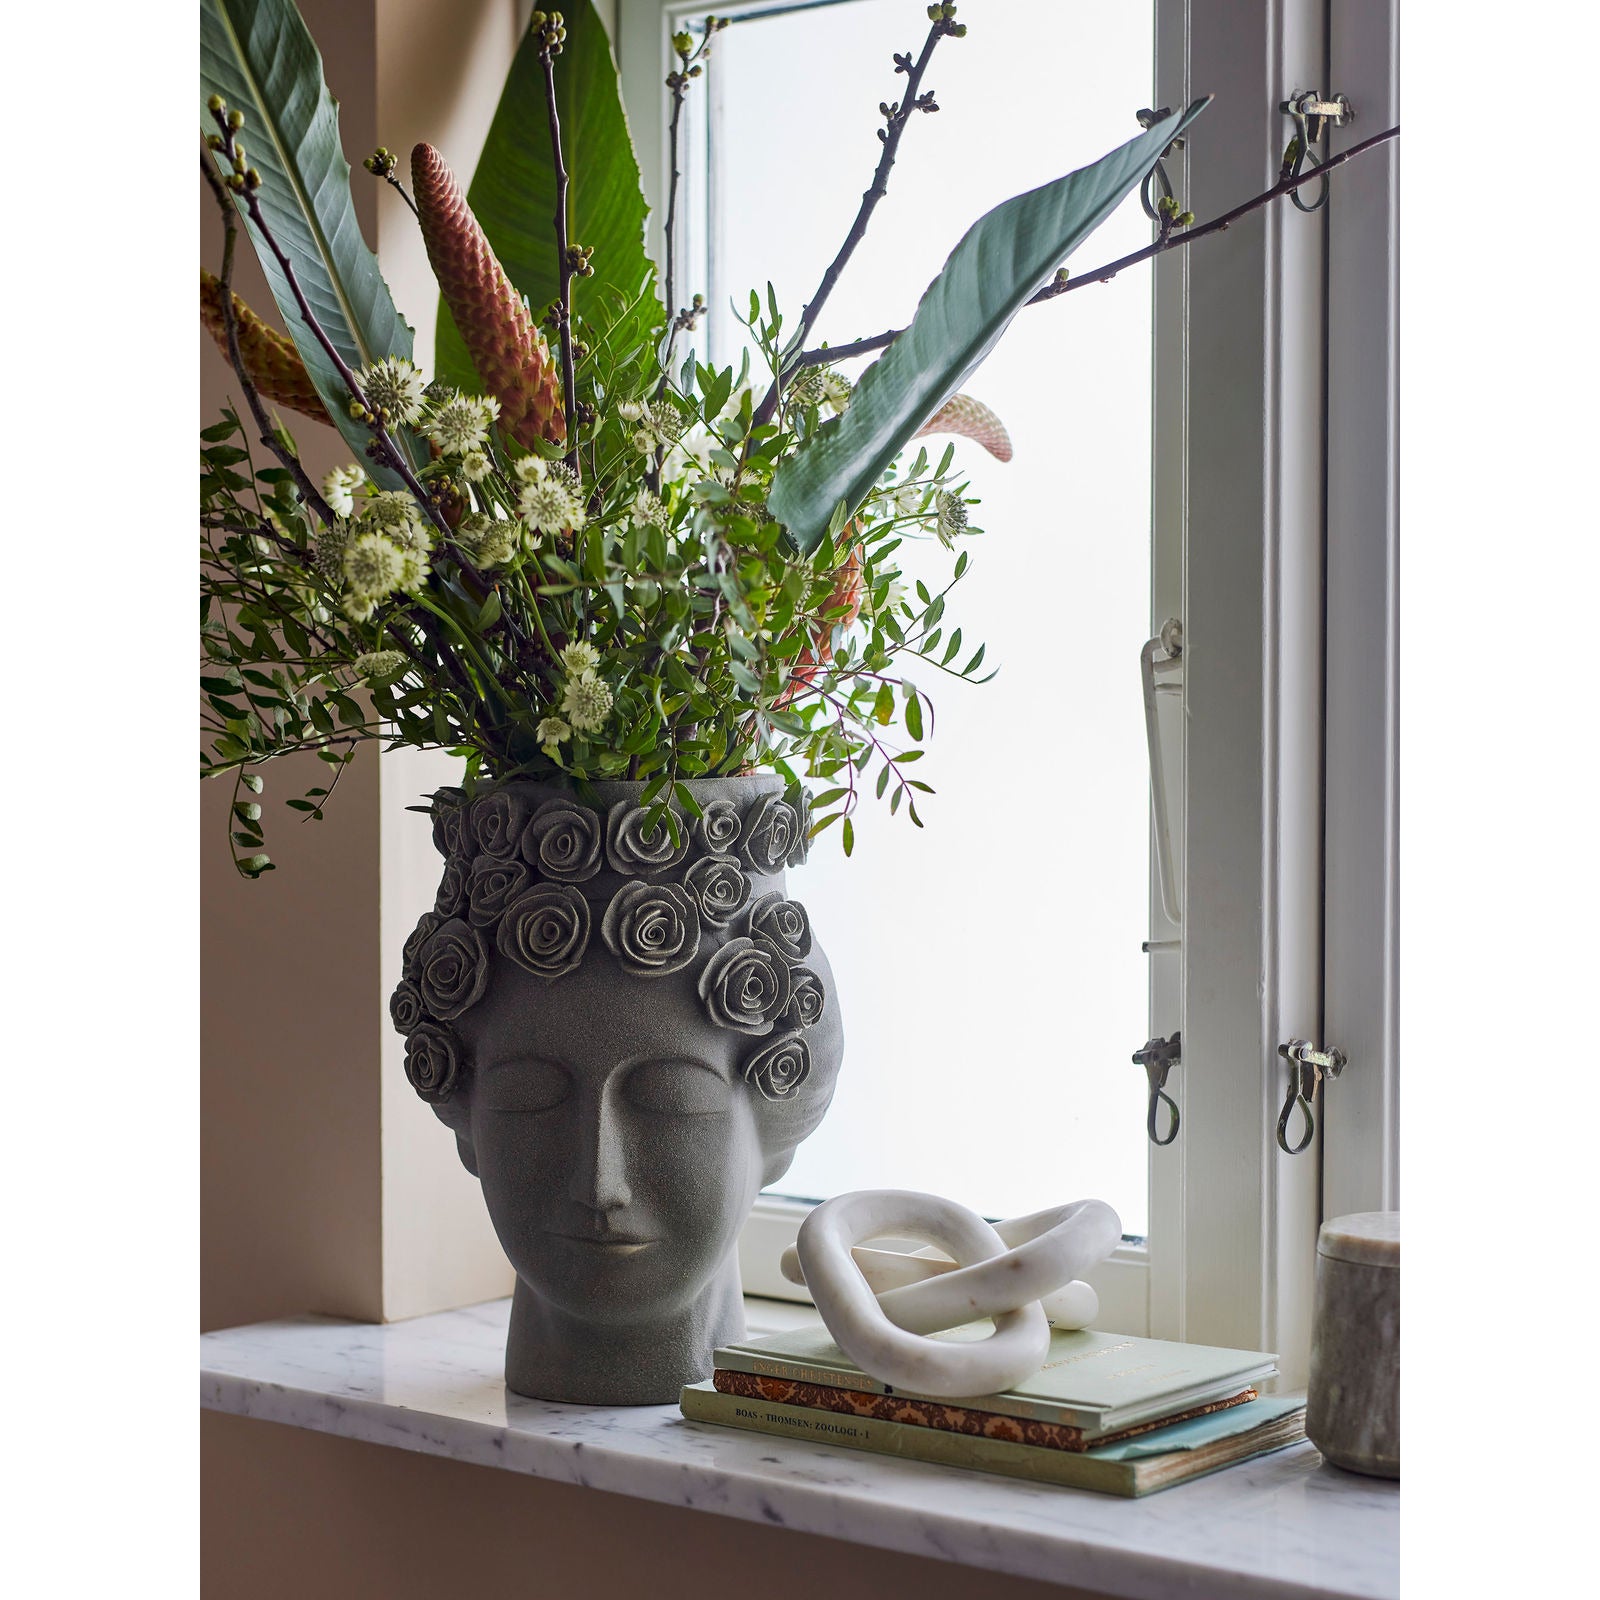 Bloomingville Akira vase, gray, stoneware